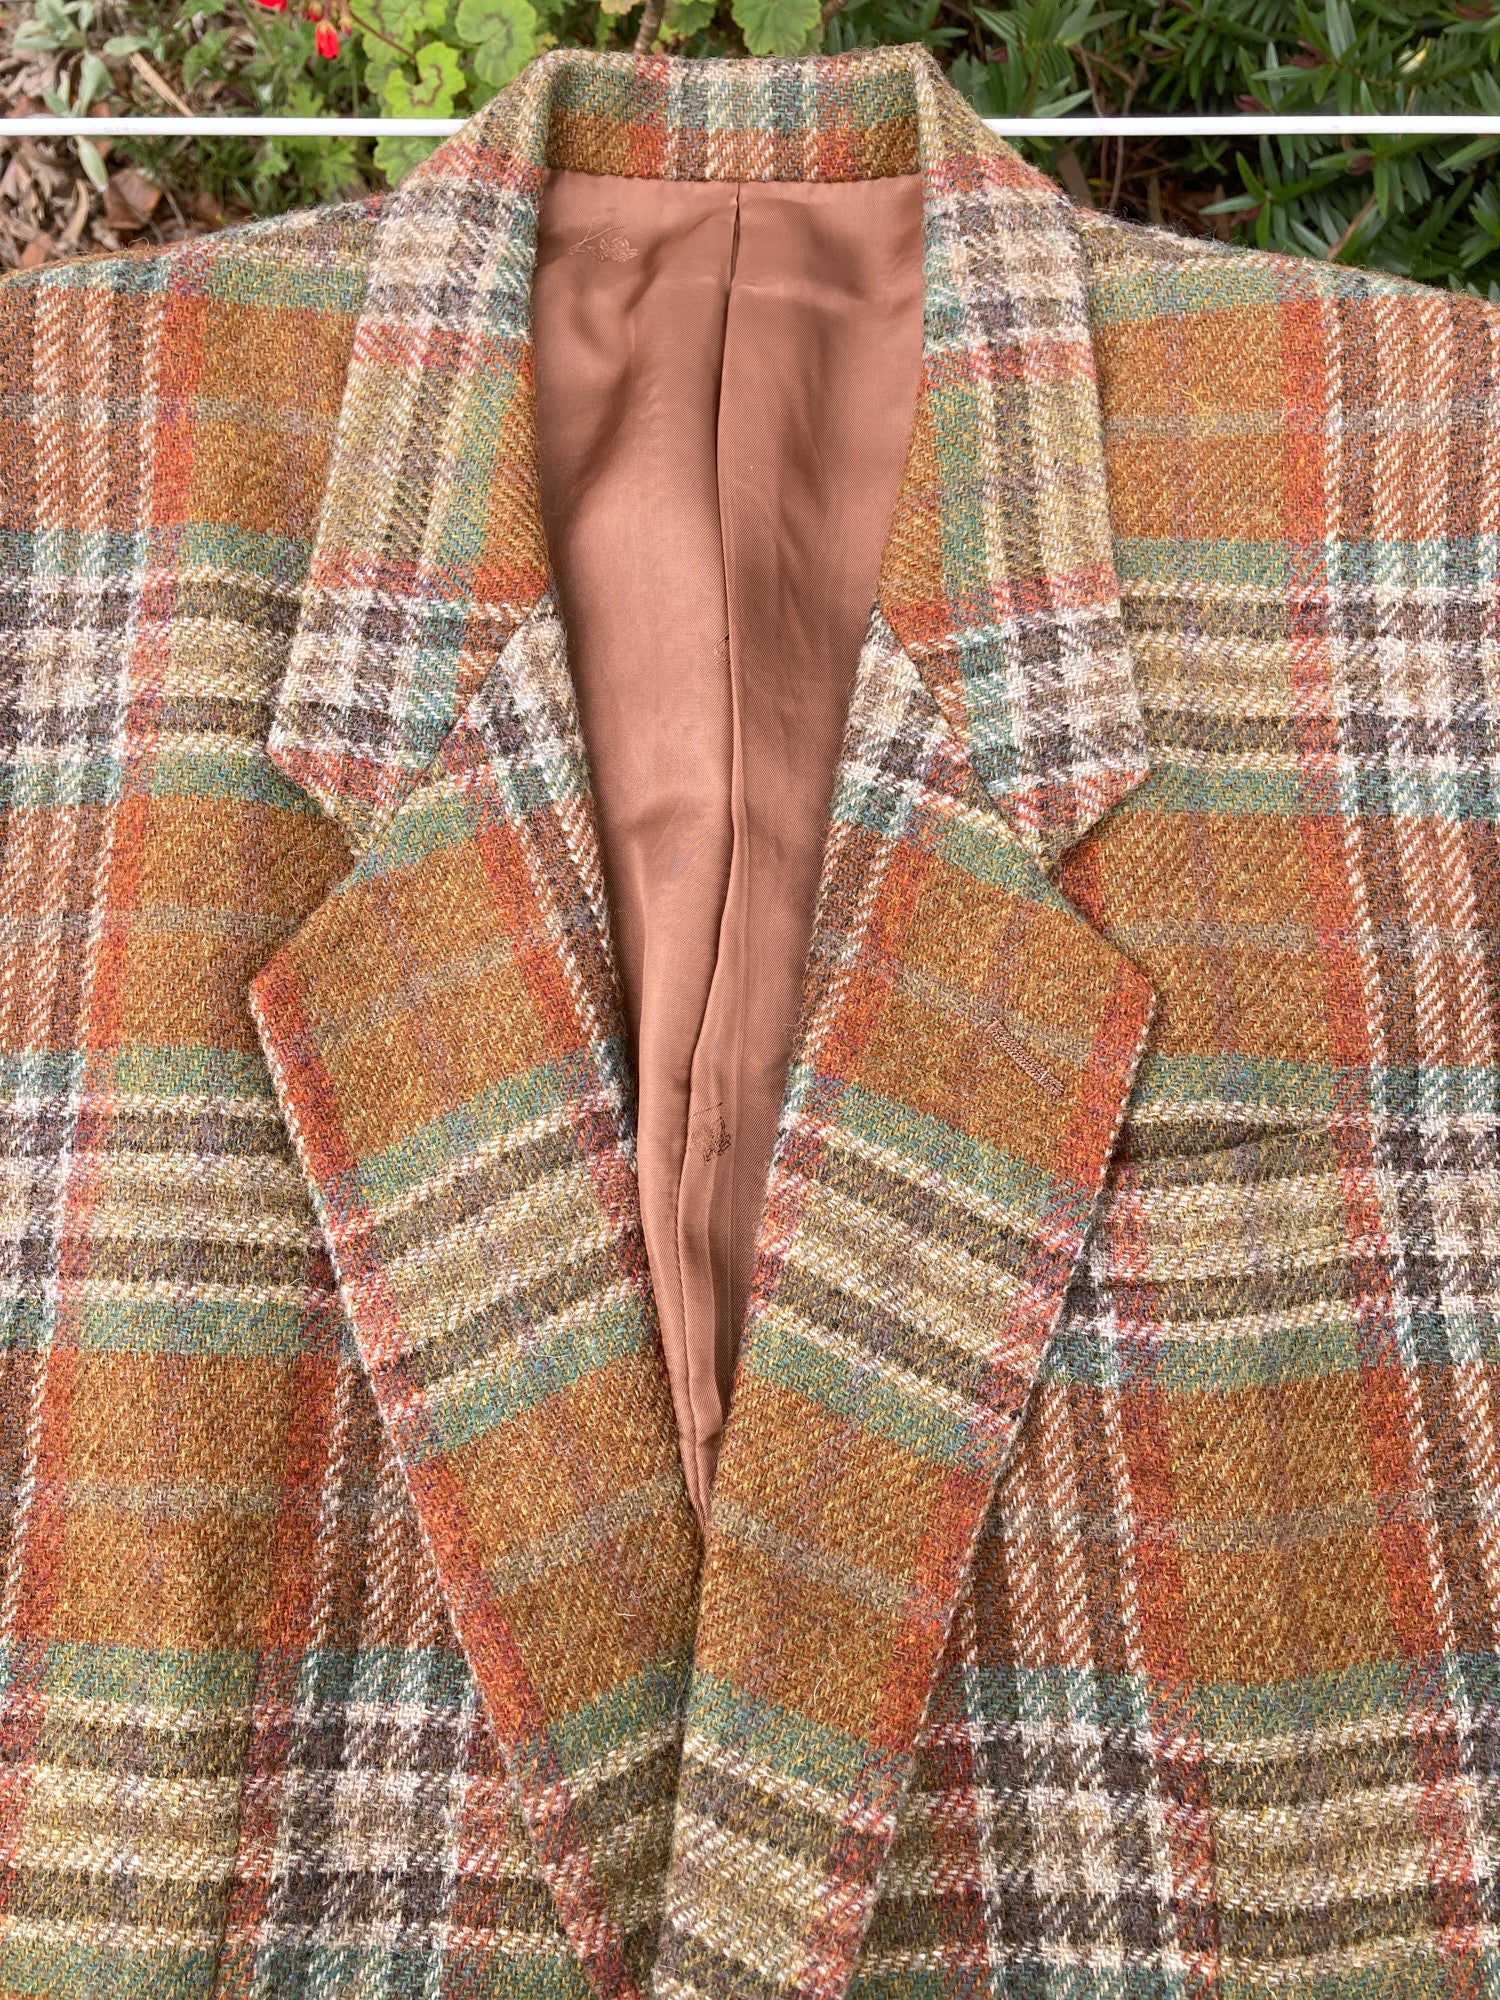 Kenzo Paris 1980s brown green plaid wool 2 button blazer trouser suit - 2 M S